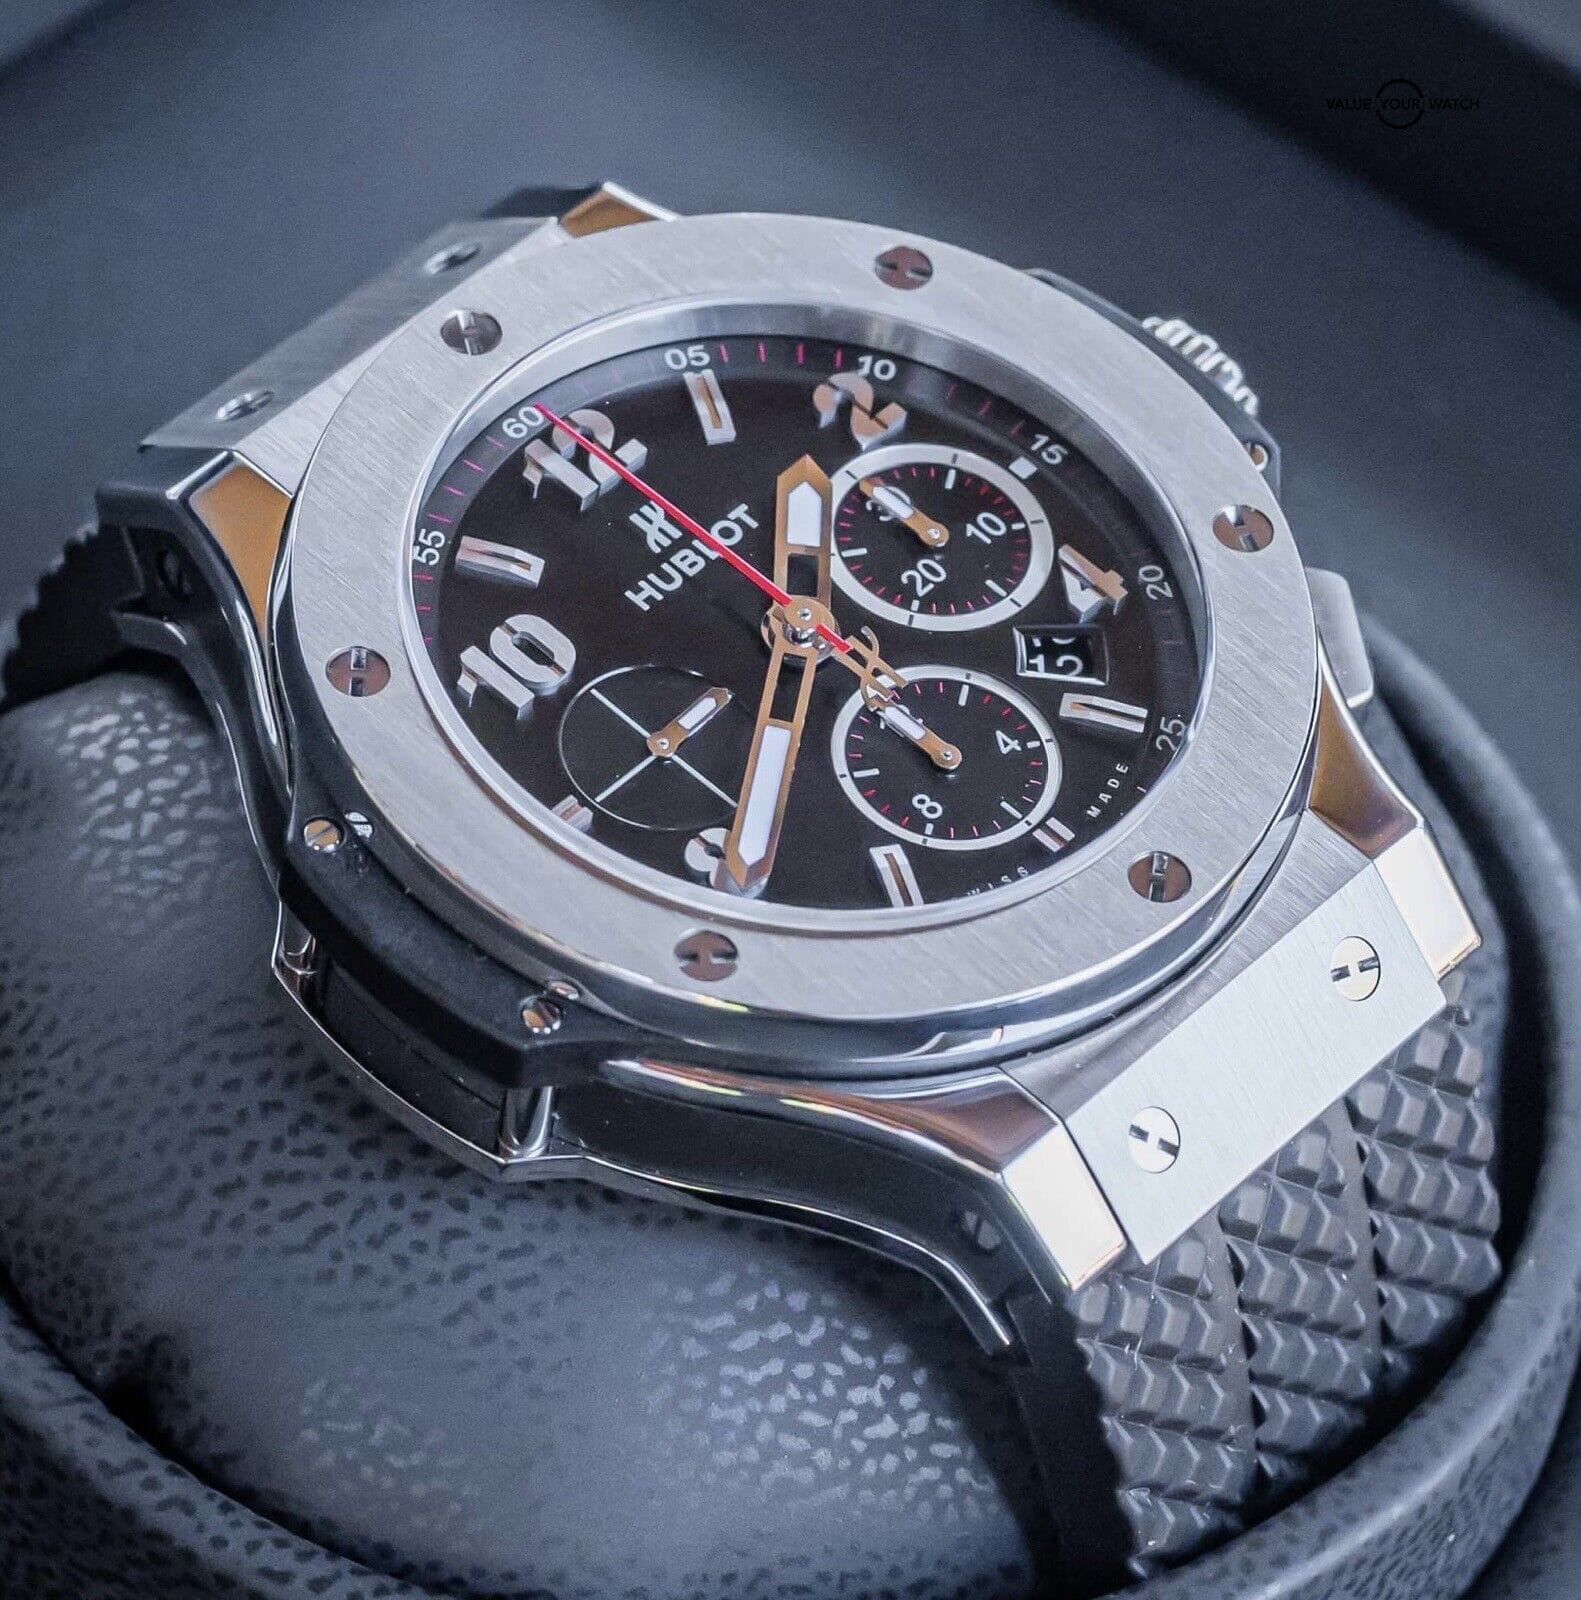  Hublot Big Bang Men's Automatic Watch 301-SX-130-RX